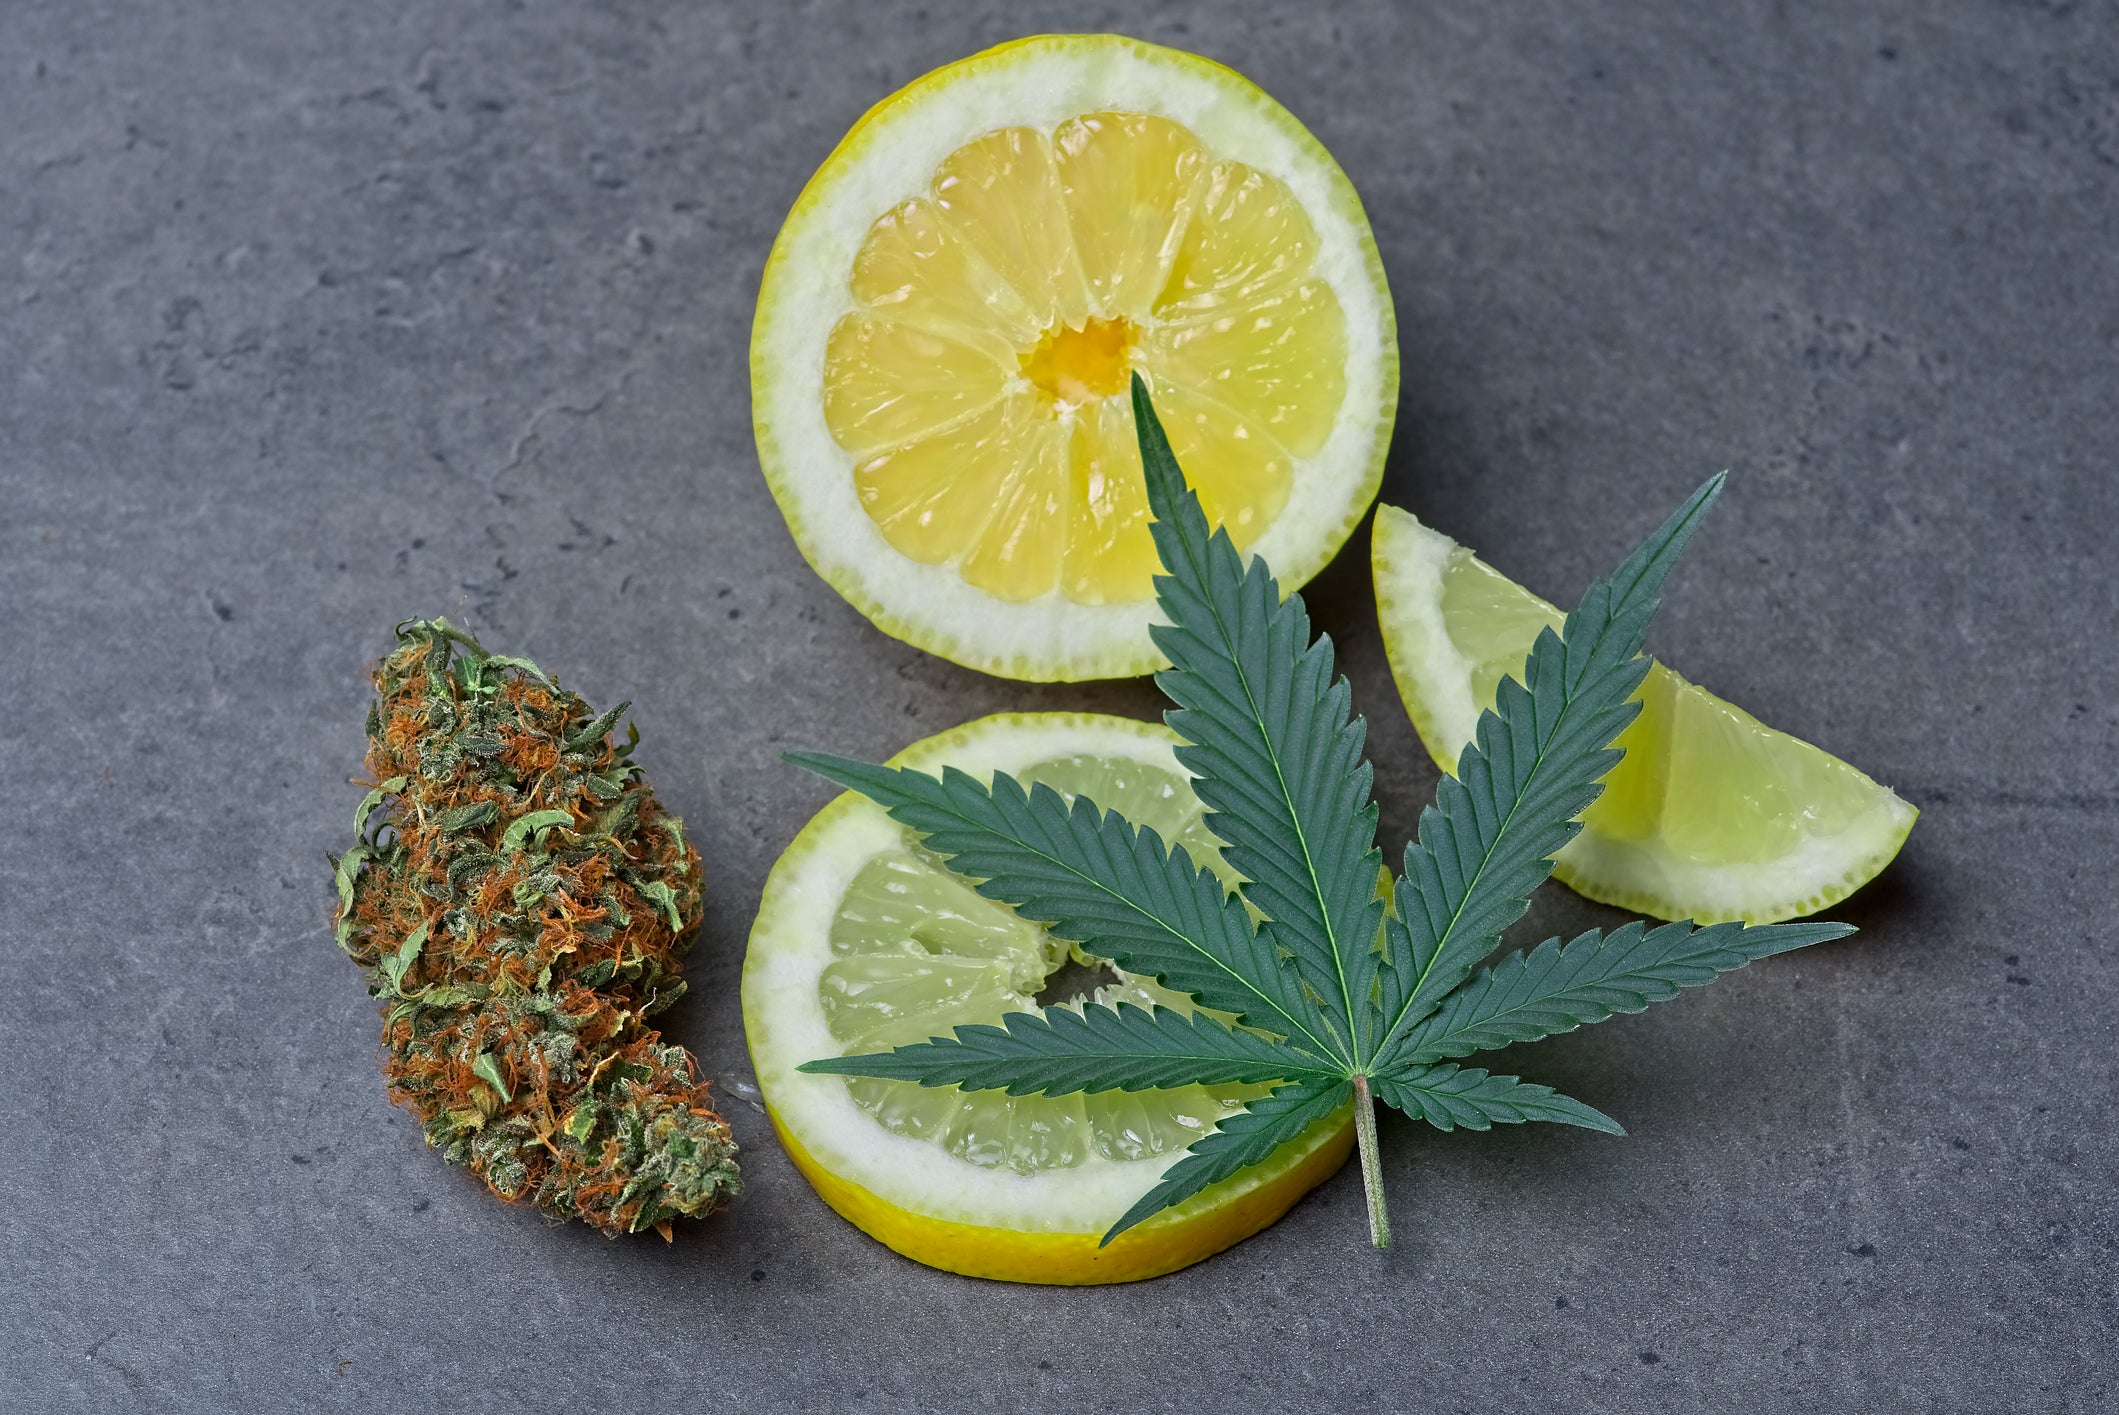 Cannabis flower leaf and nug lie next to sliced lemons with the same terpene called limonene.